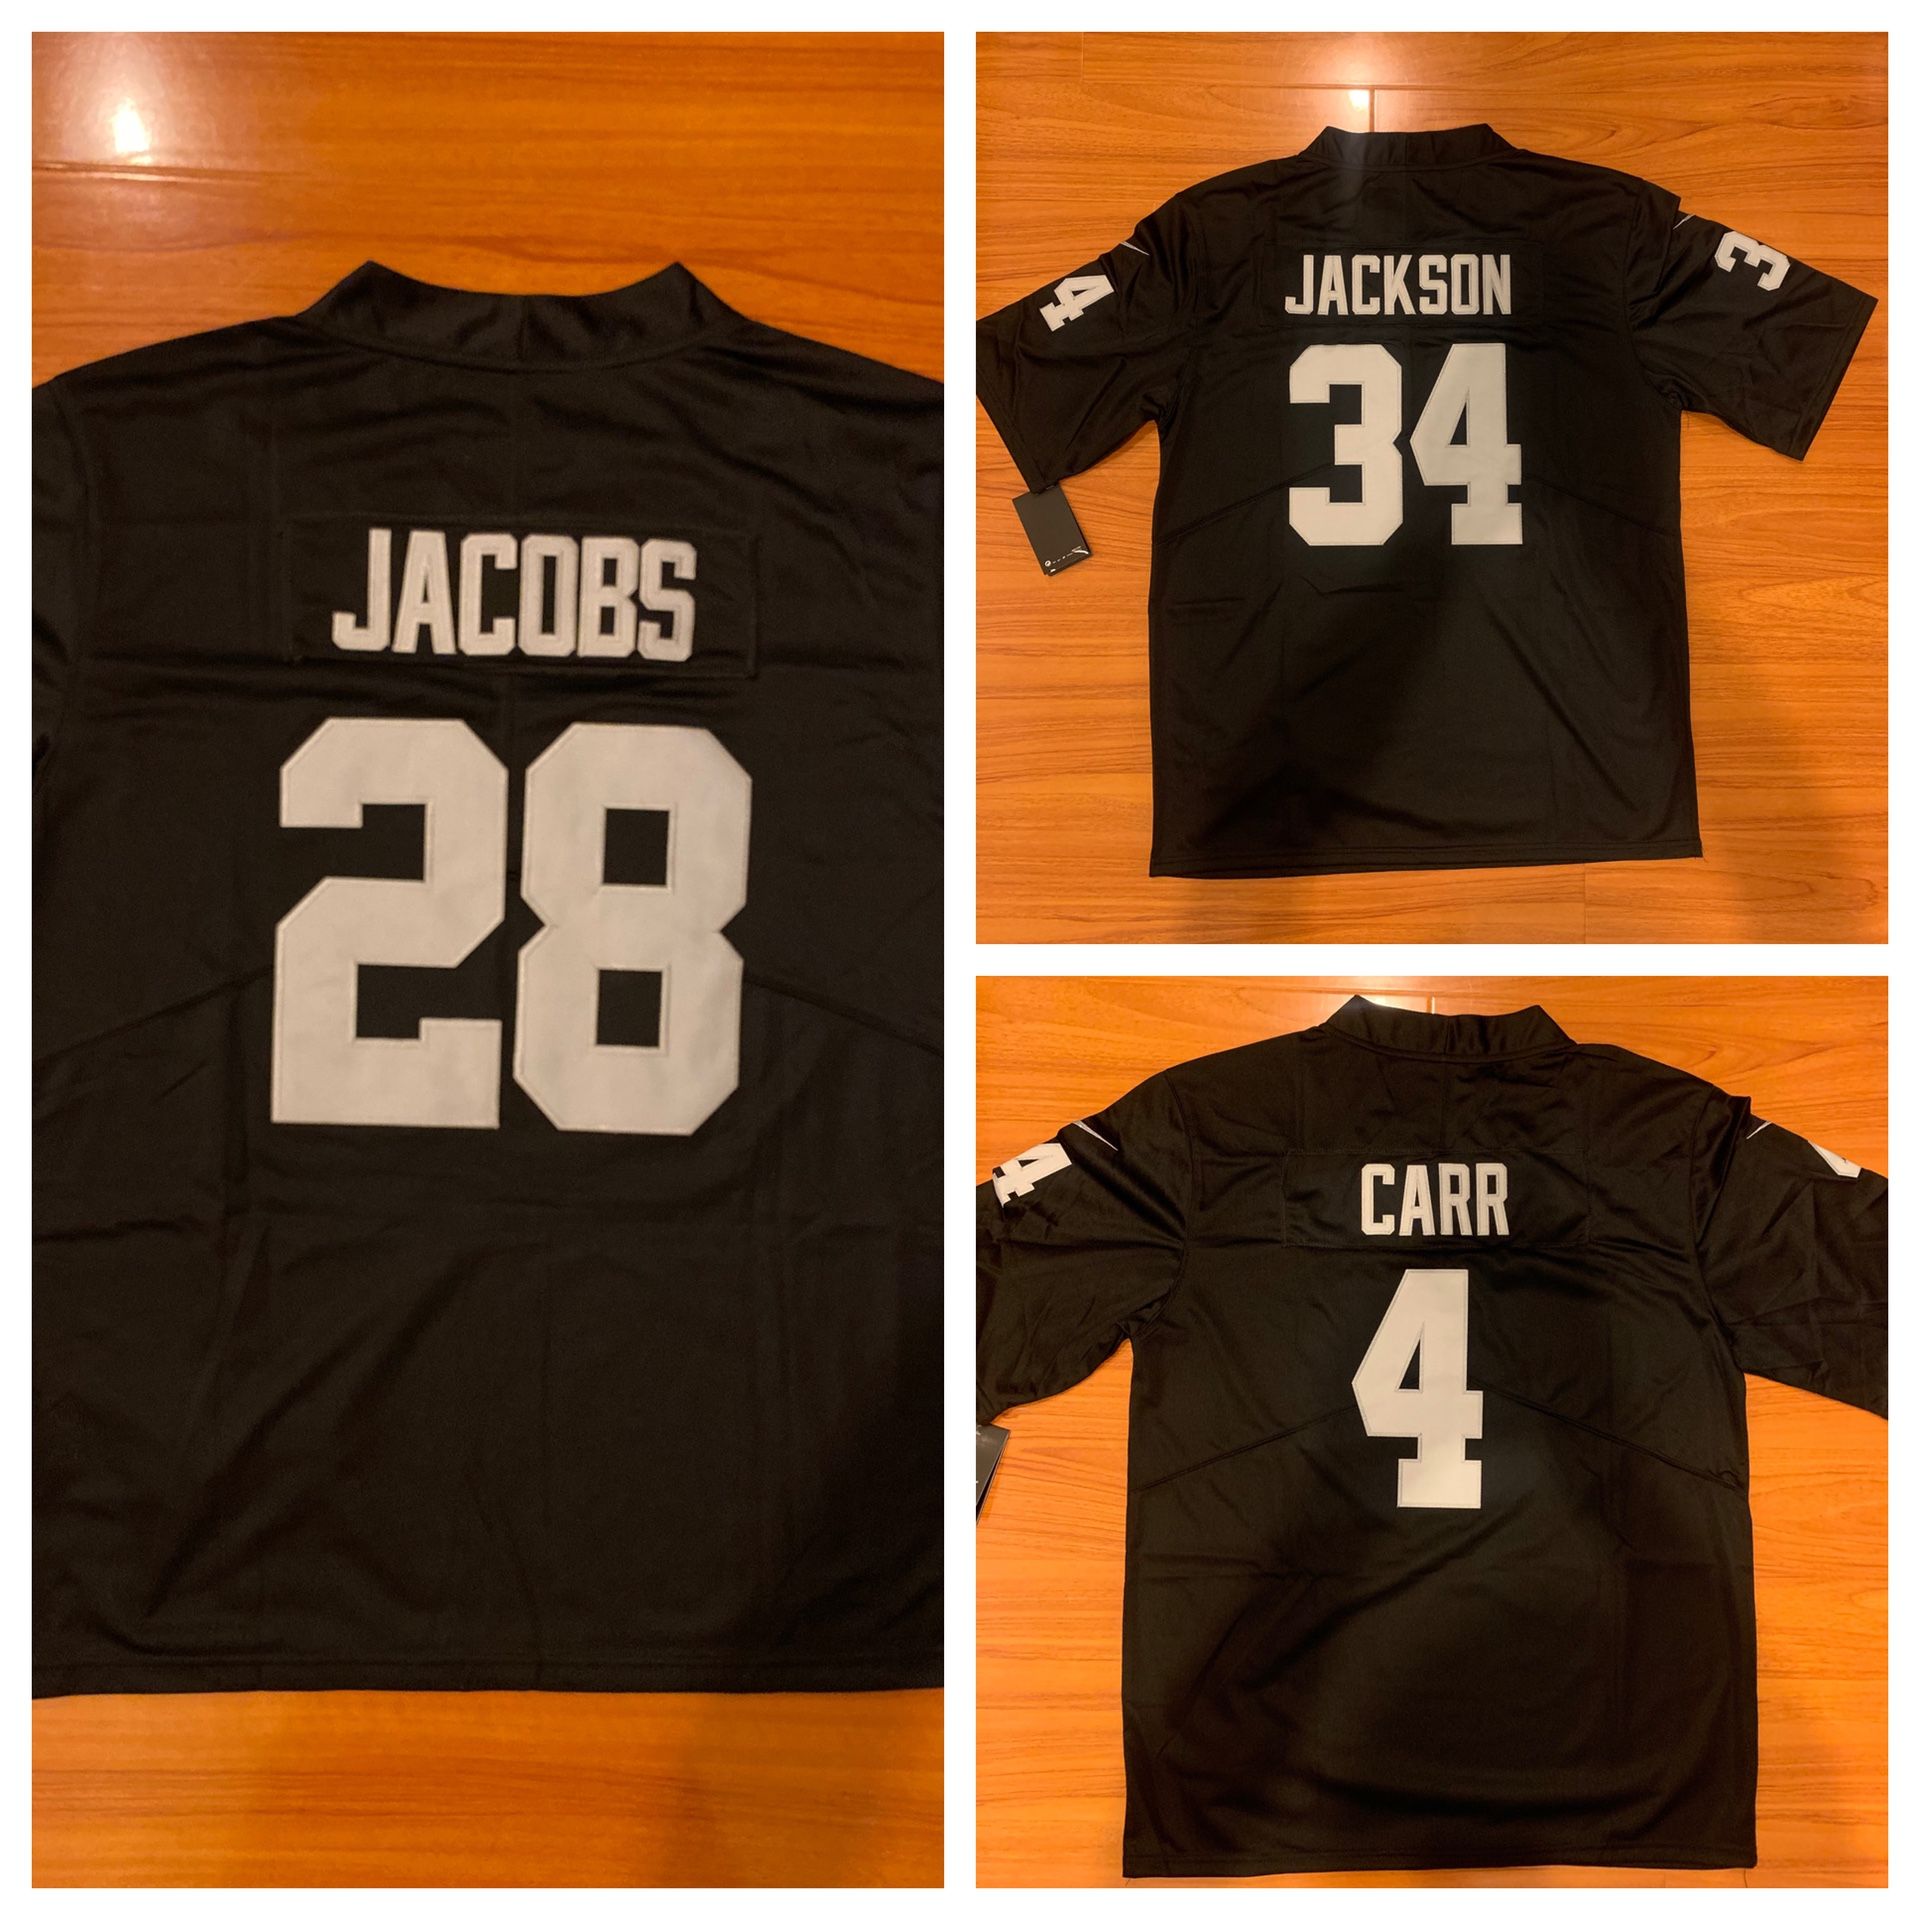 Los Angeles Oakland Las Vegas Raiders NFL Jersey Jacobs Jackson Carr